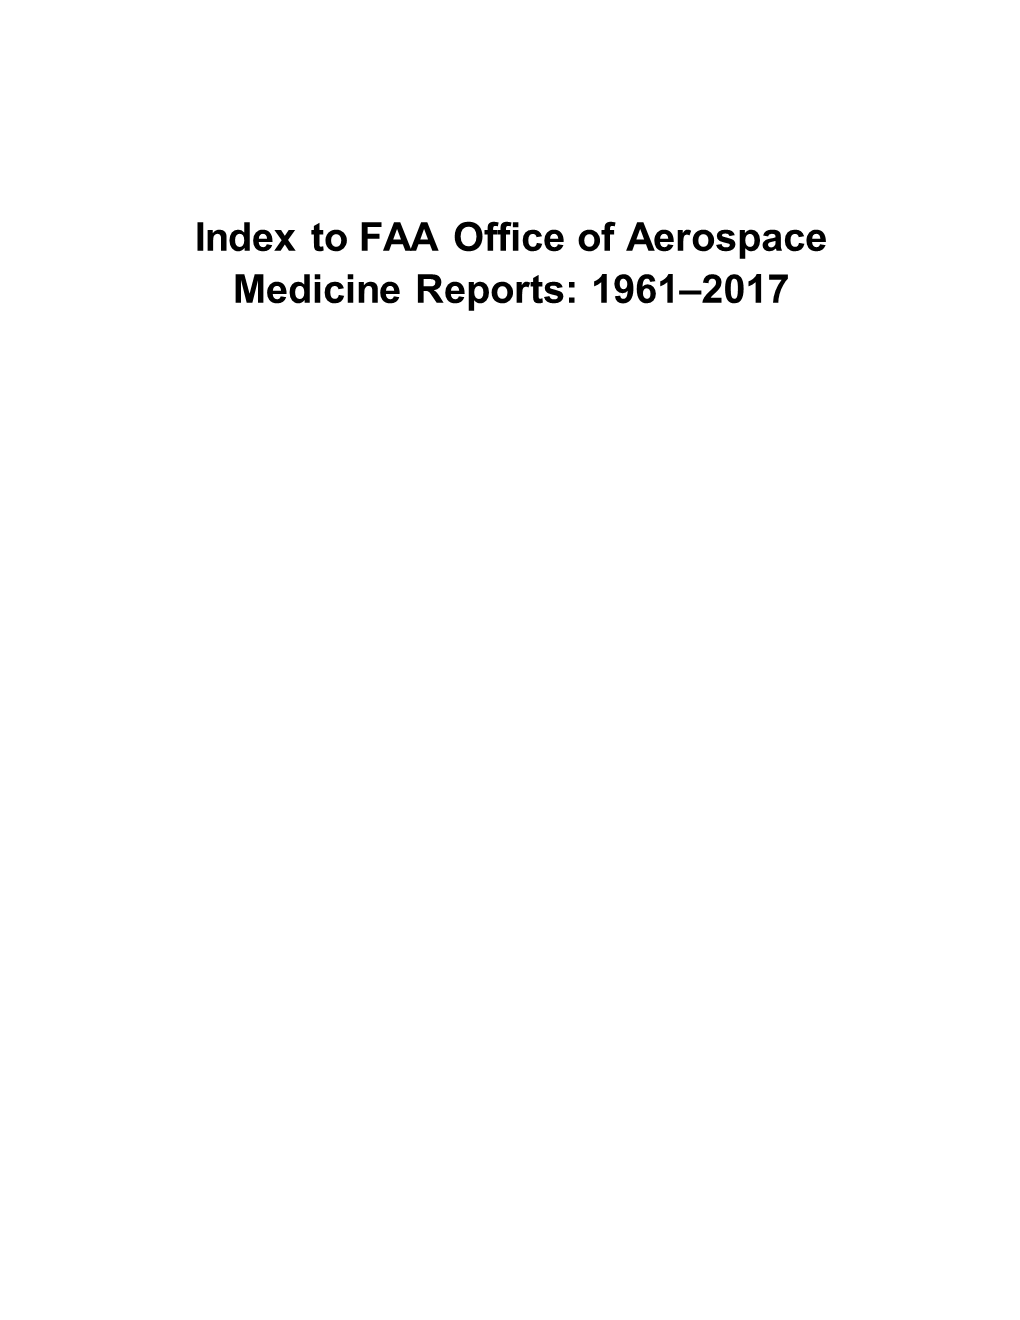 Office of Aerospace Medicine Index: 1961-2017